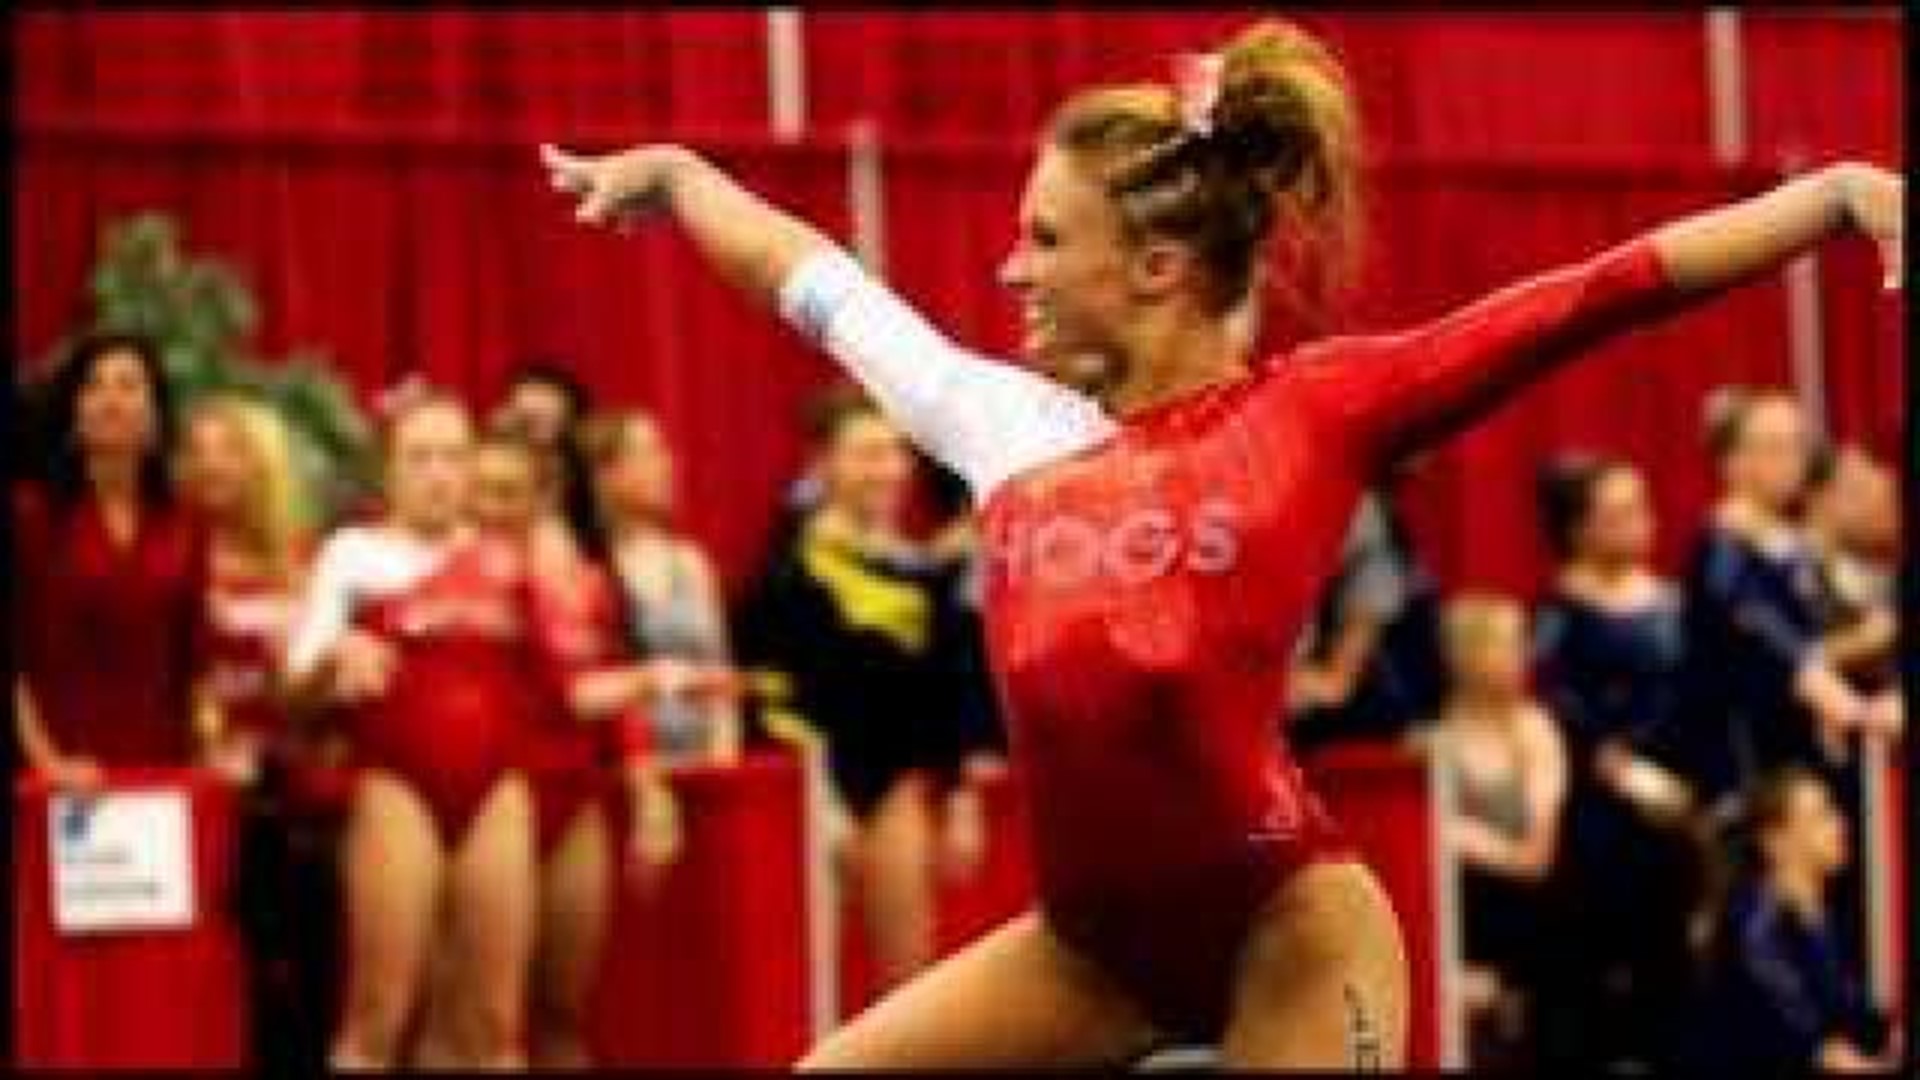 University of Arkansas Women’s Gymnastics team ranked #12